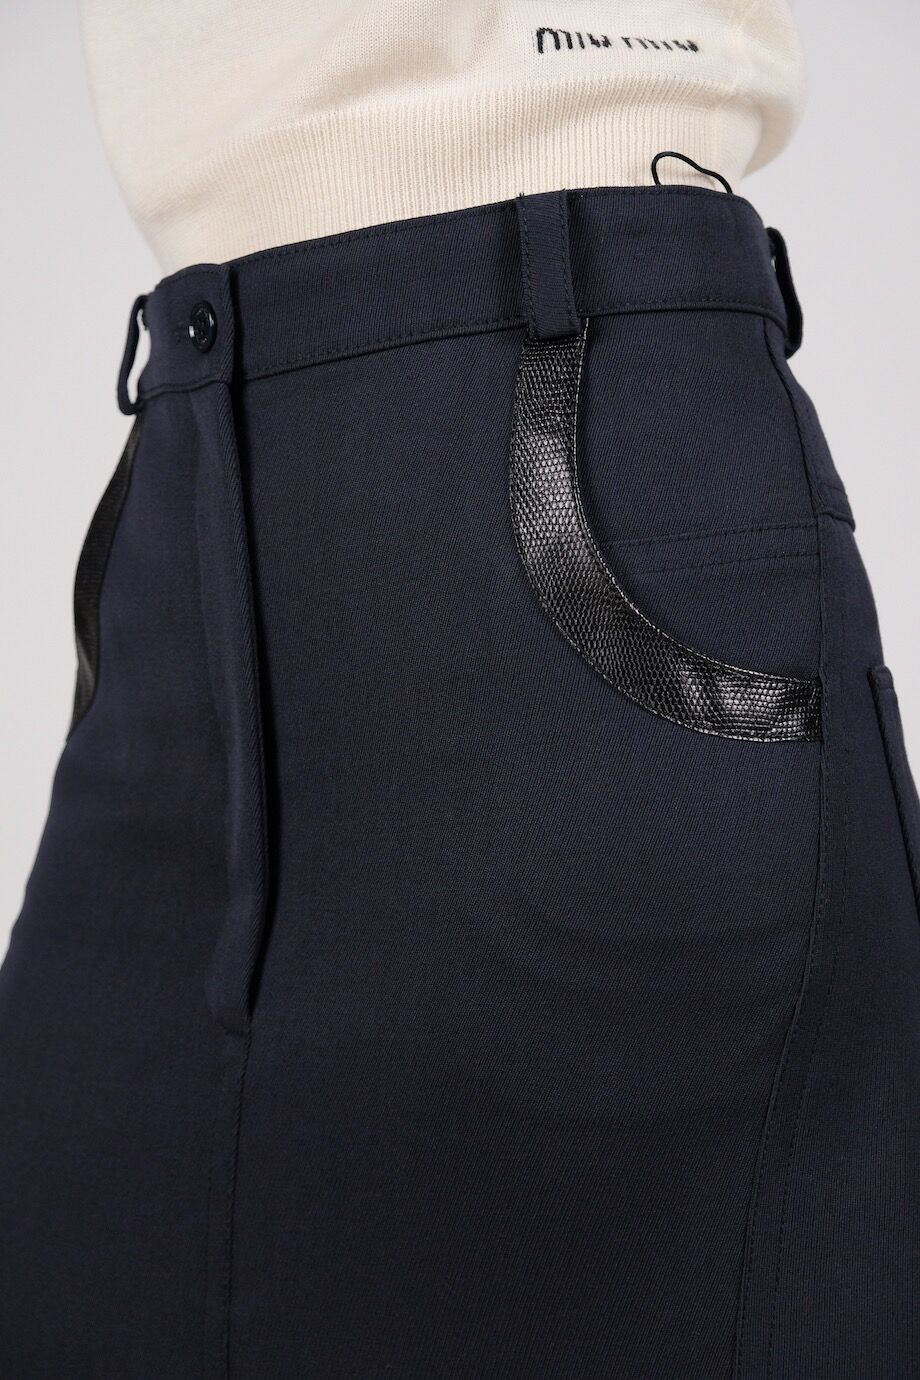 image 5 Юбка миди темно-синего цвета с кожаной окантовкой на карманах